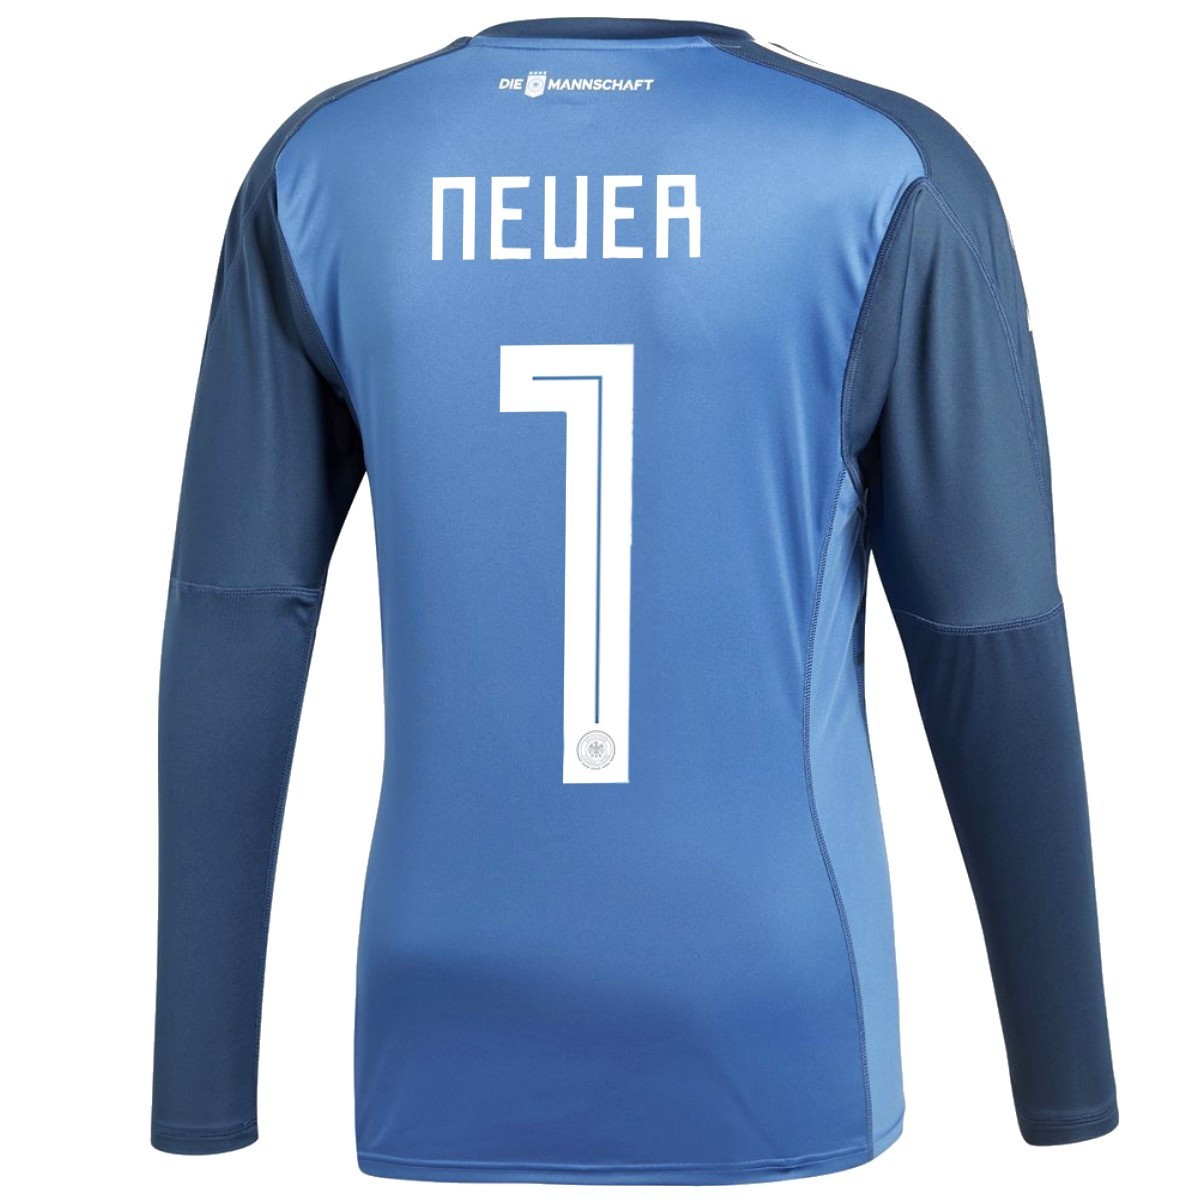 Germany Neuer 1 Home goalkeeper shirt 2018/19 - Adidas